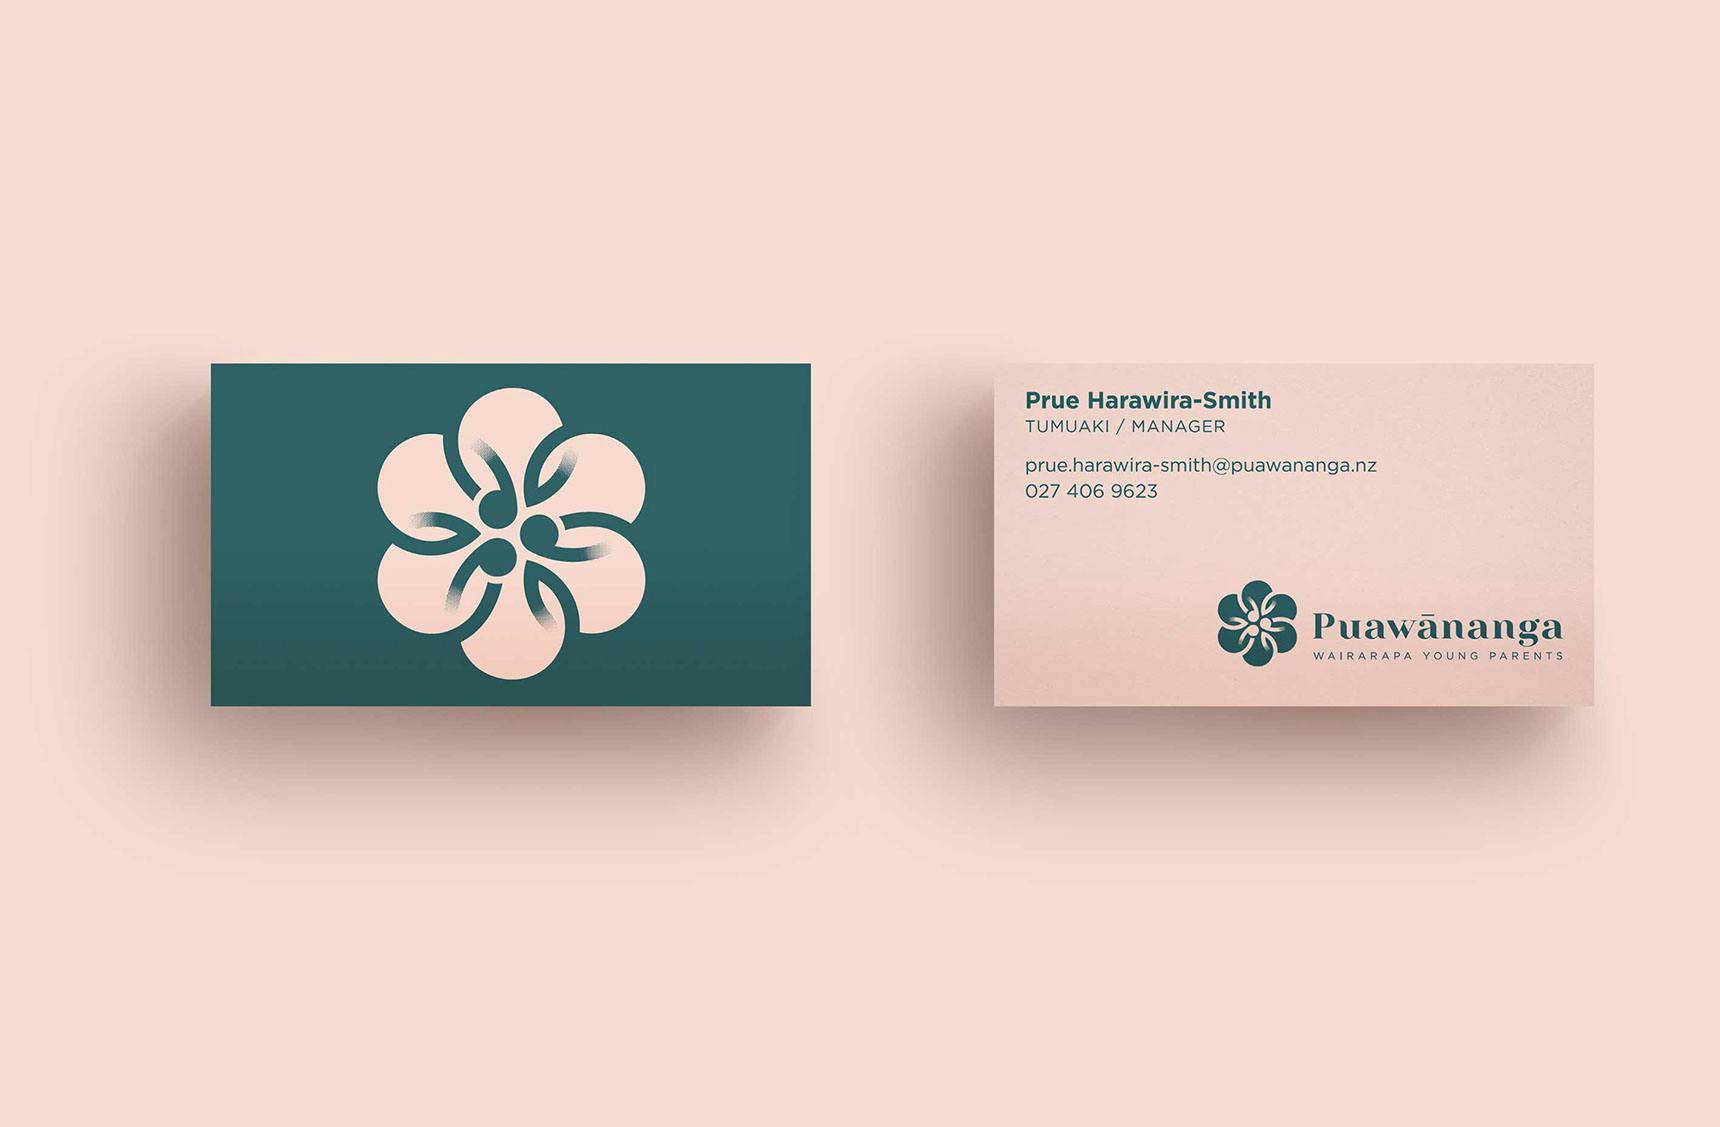 Puawananga Business Card Design